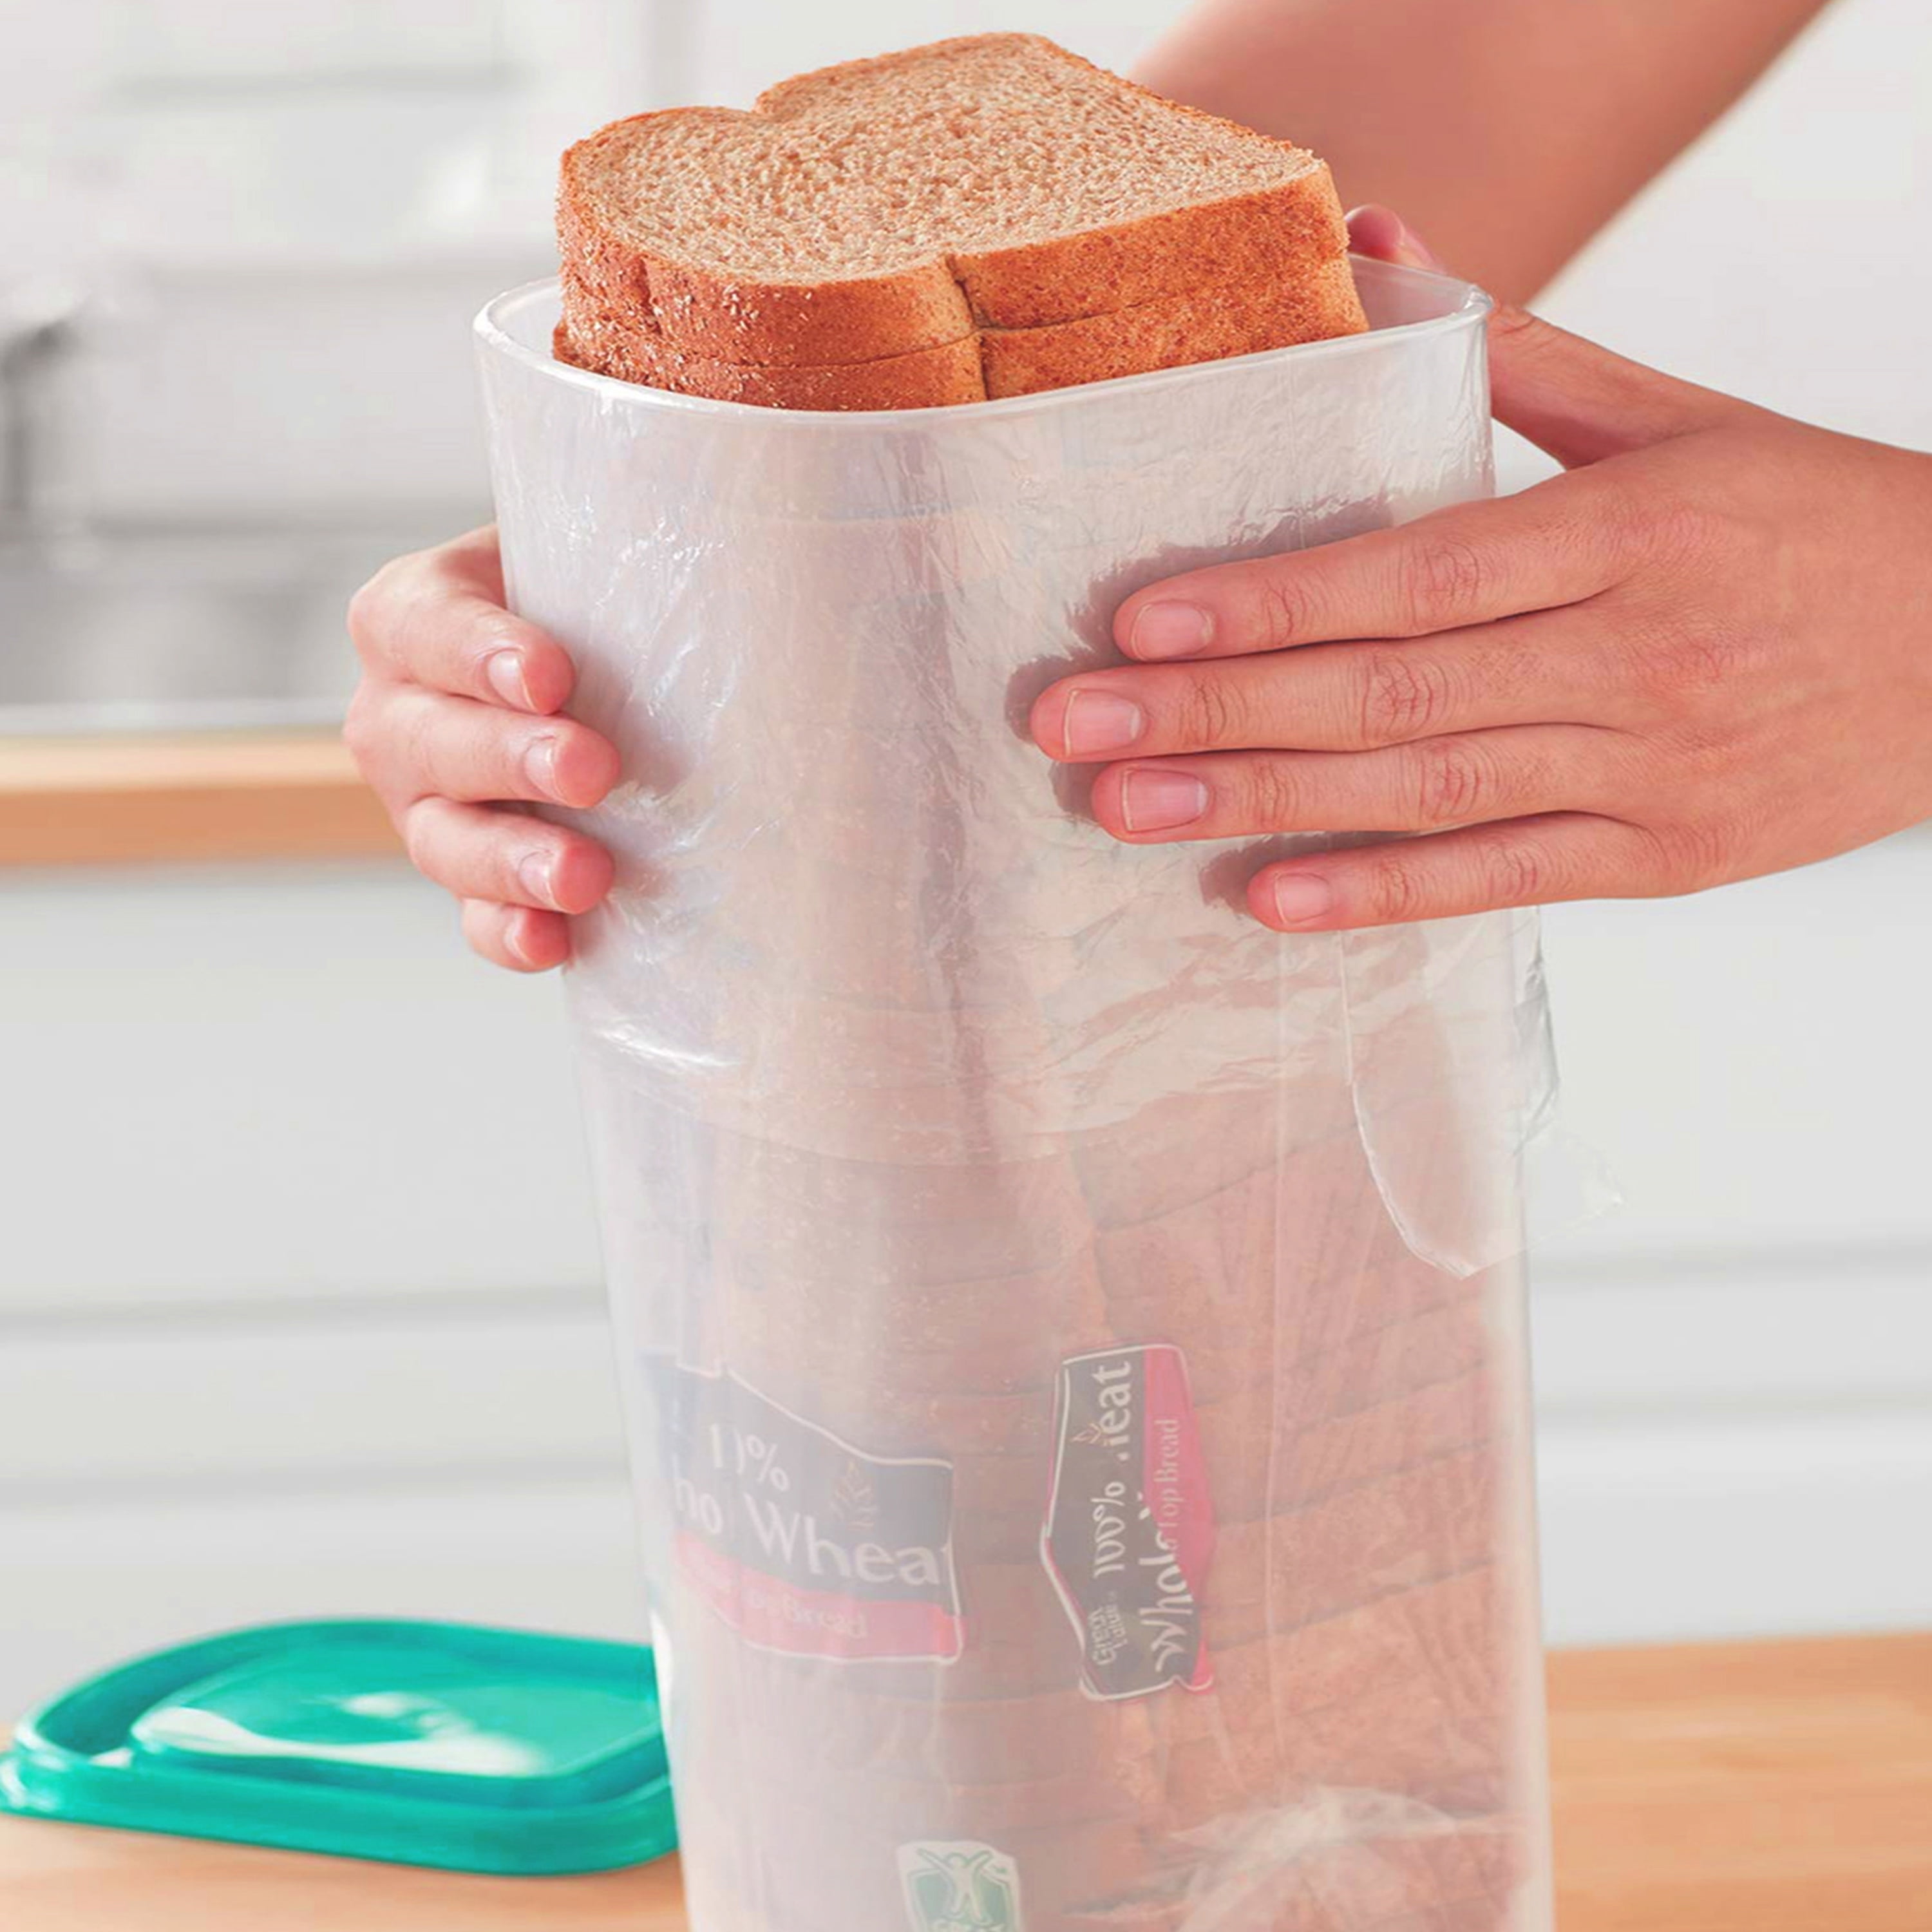 Buddeez Bread Buddy Bread Box – Fresh Bread Storage Container